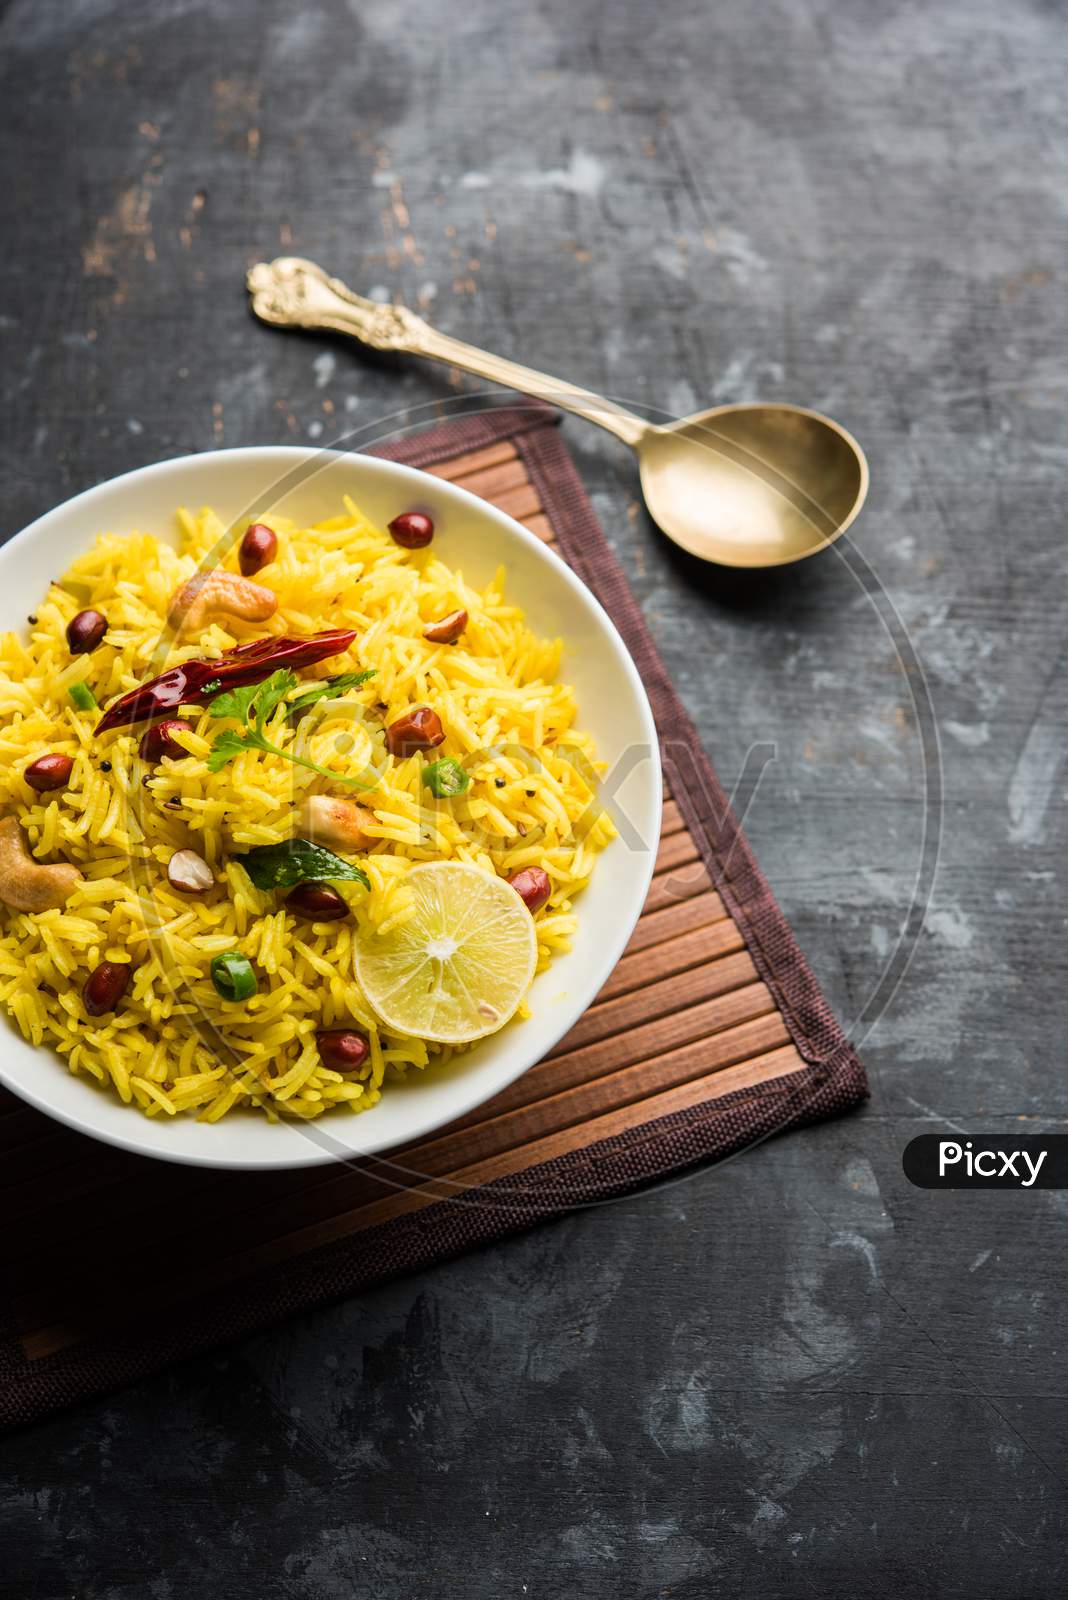 Lemon Rice / Fodnicha bhat